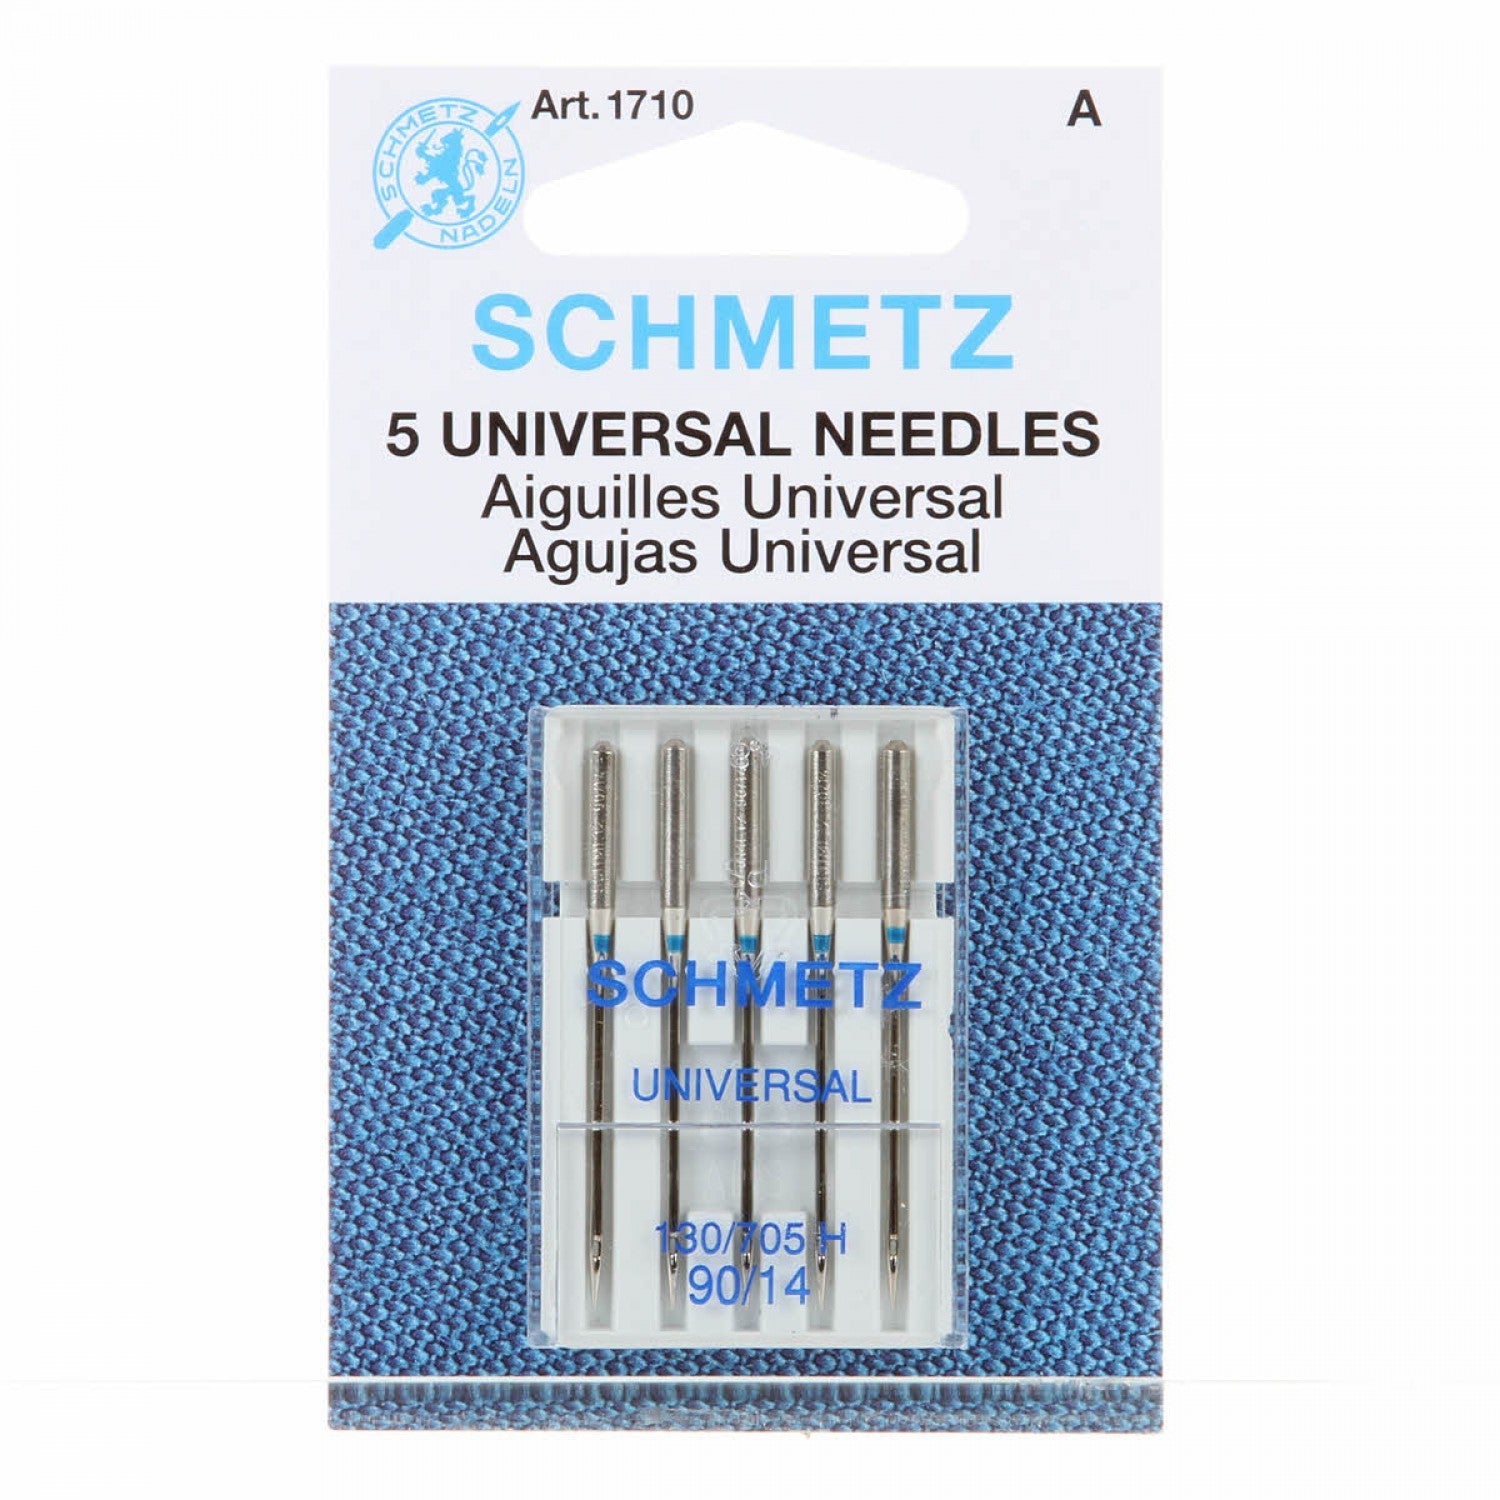 Schmetz Universal Needle - Size 90/14 - 1 Package of 5 Needles